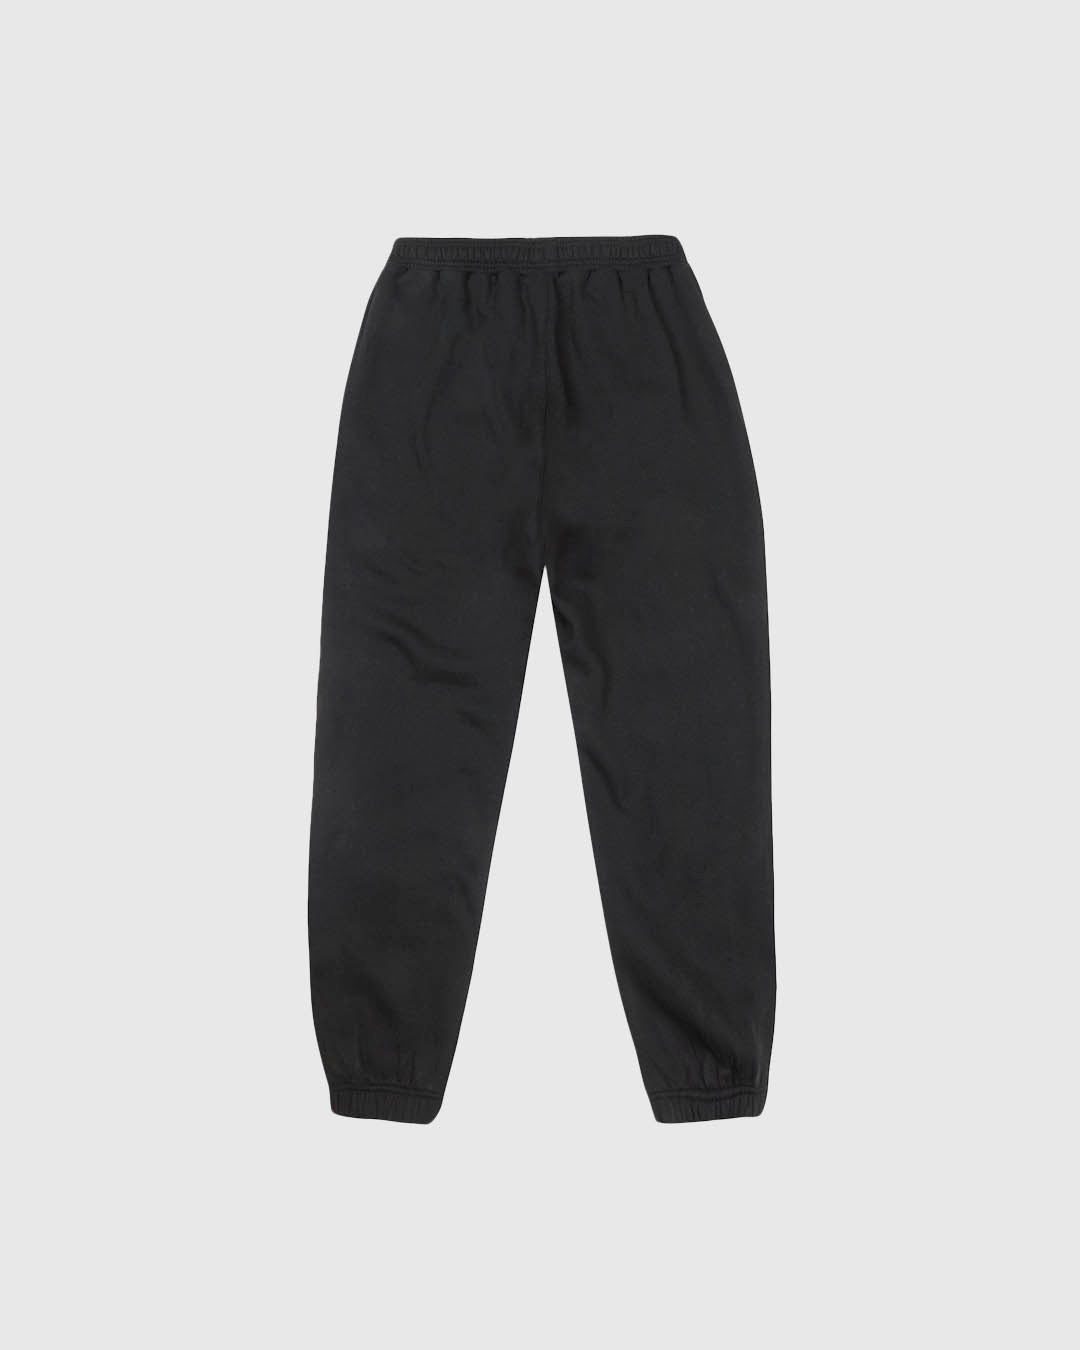 PFC: 002-4 - Women's Sweatpants - Onyx Black